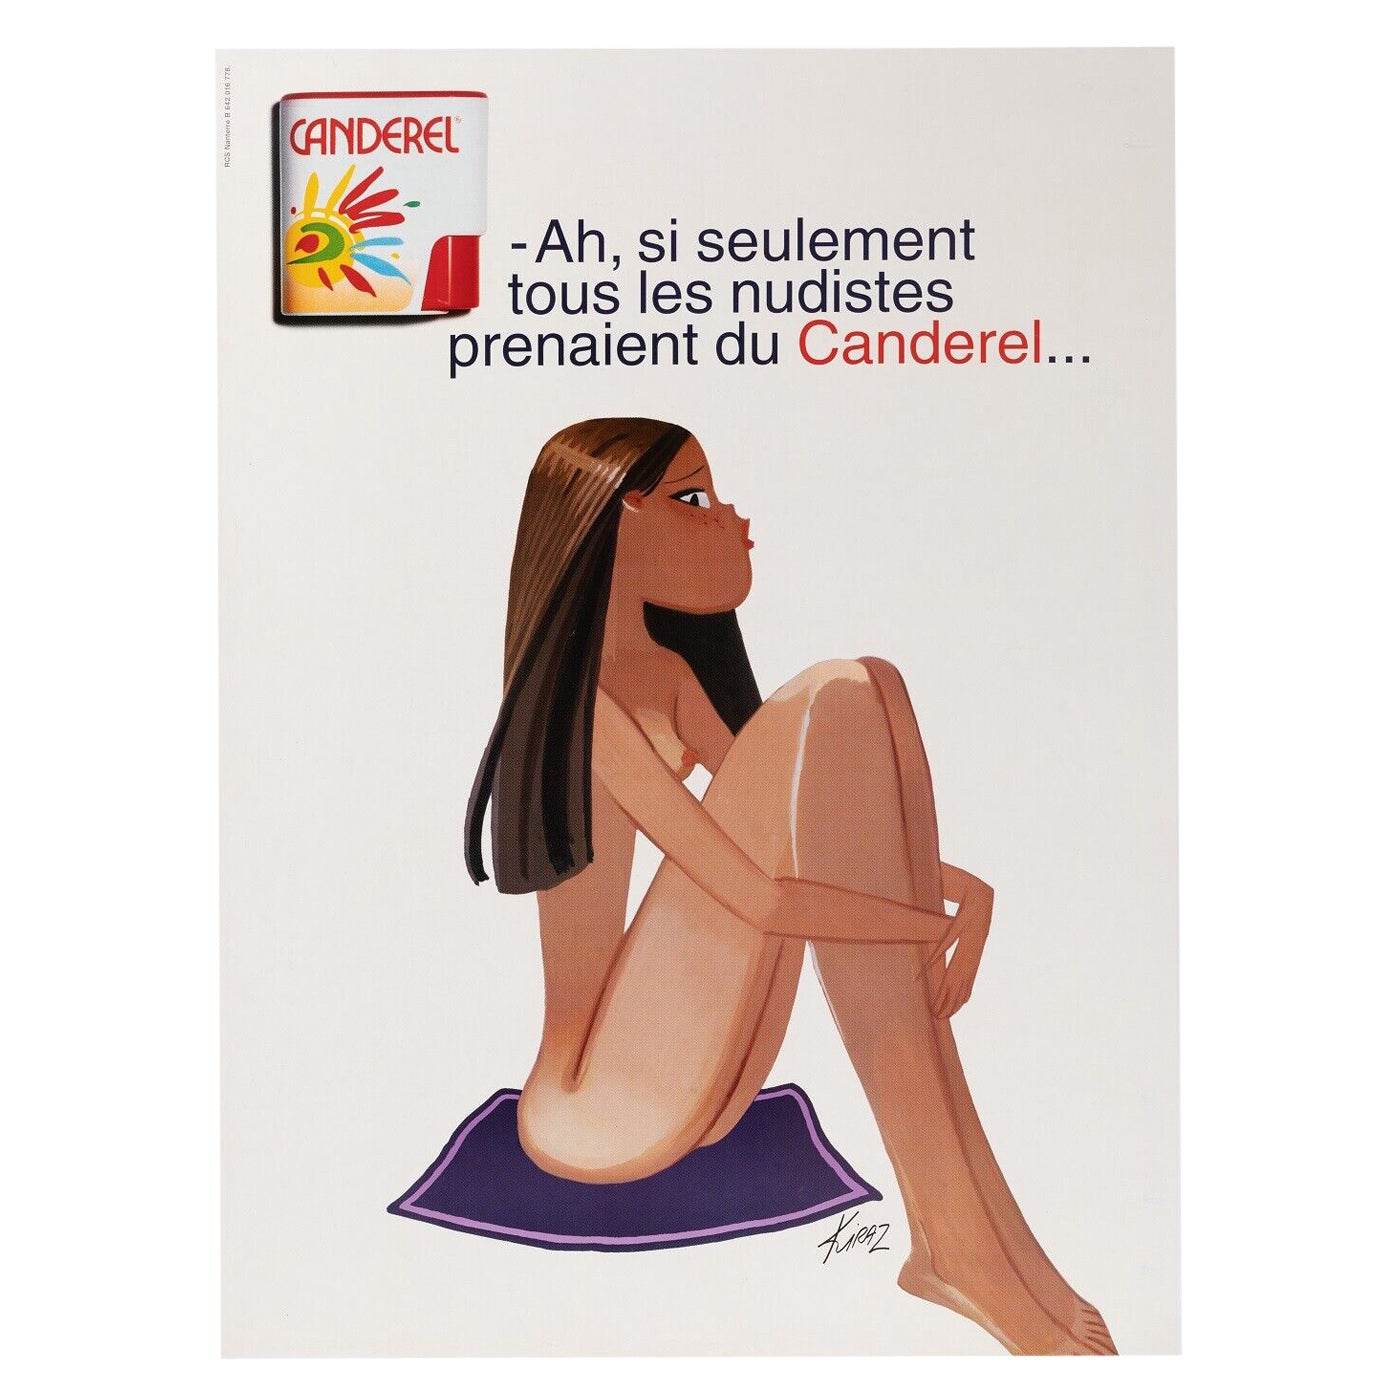 Original Poster-Edmond Kiraz-Canderel -The Nudist-Parisiennes, 1995 For Sale